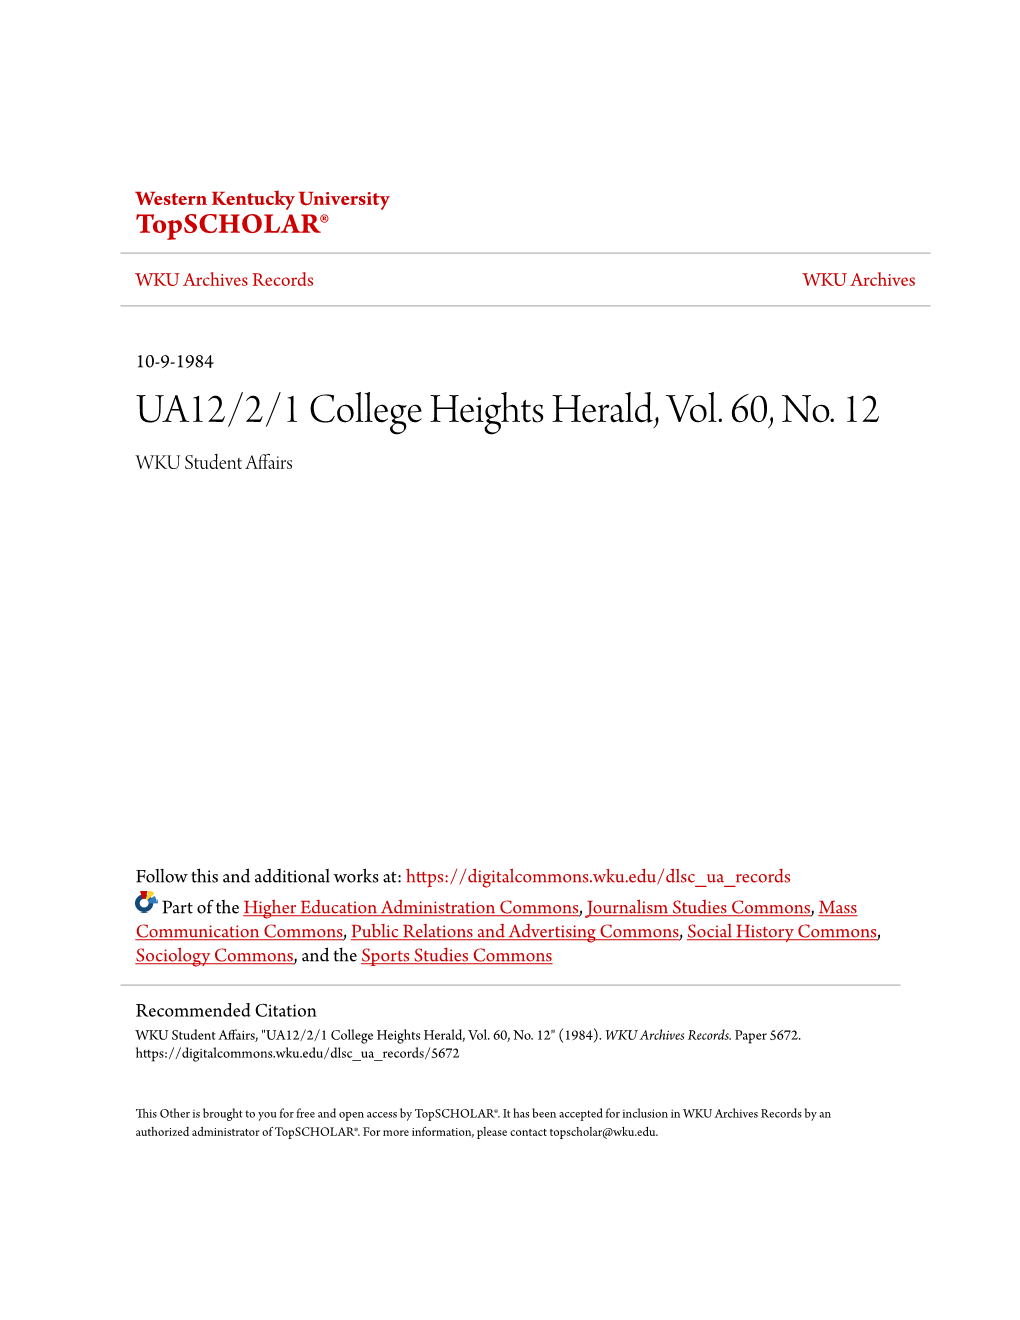 UA12/2/1 College Heights Herald, Vol. 60, No. 12 WKU Student Affairs